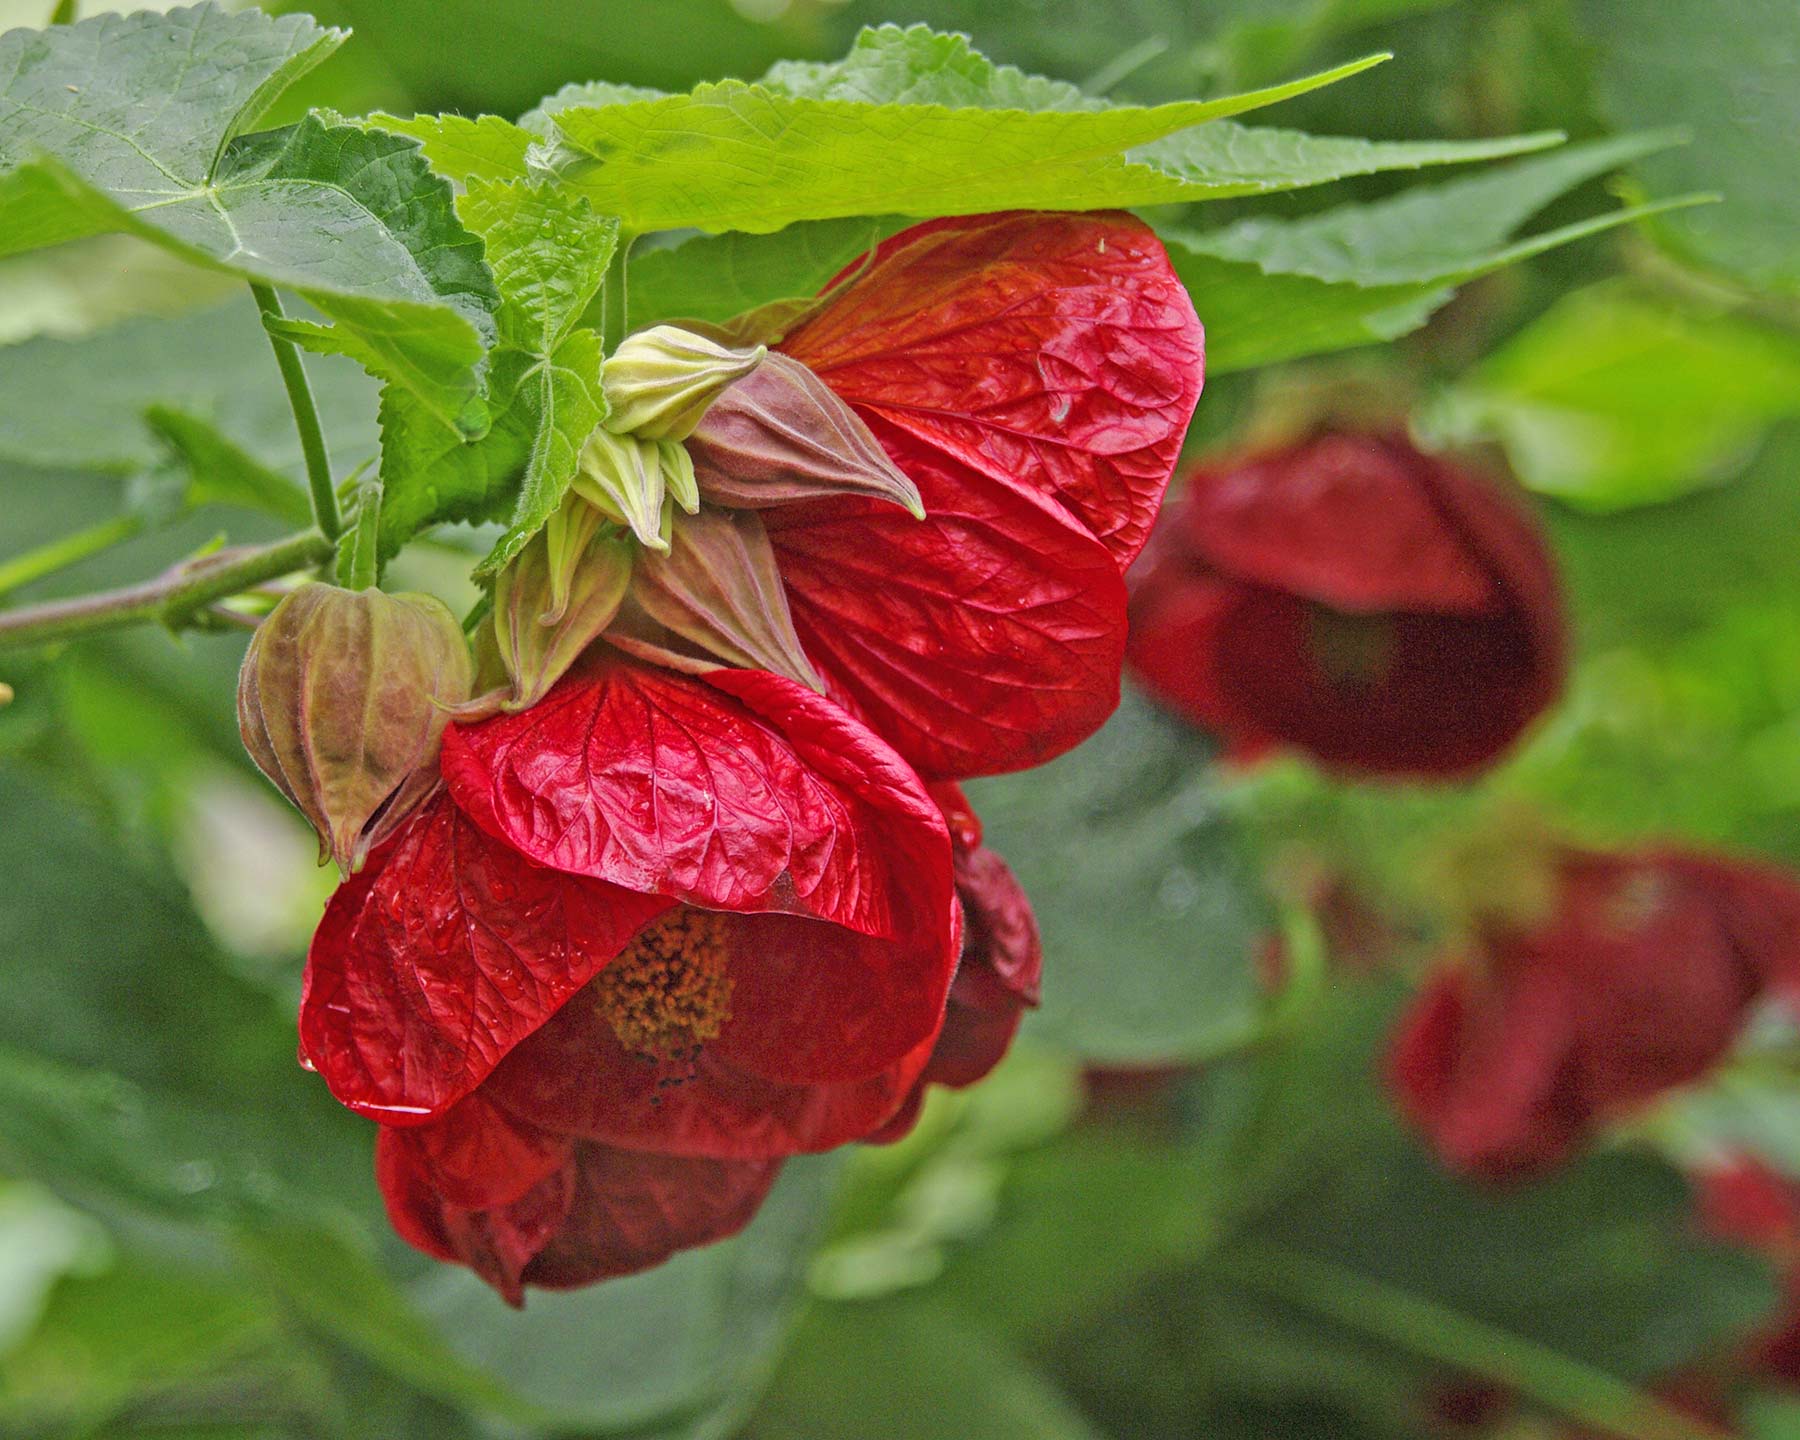 Deep red flowers of Abutilon hybrid  'Ashford Red'